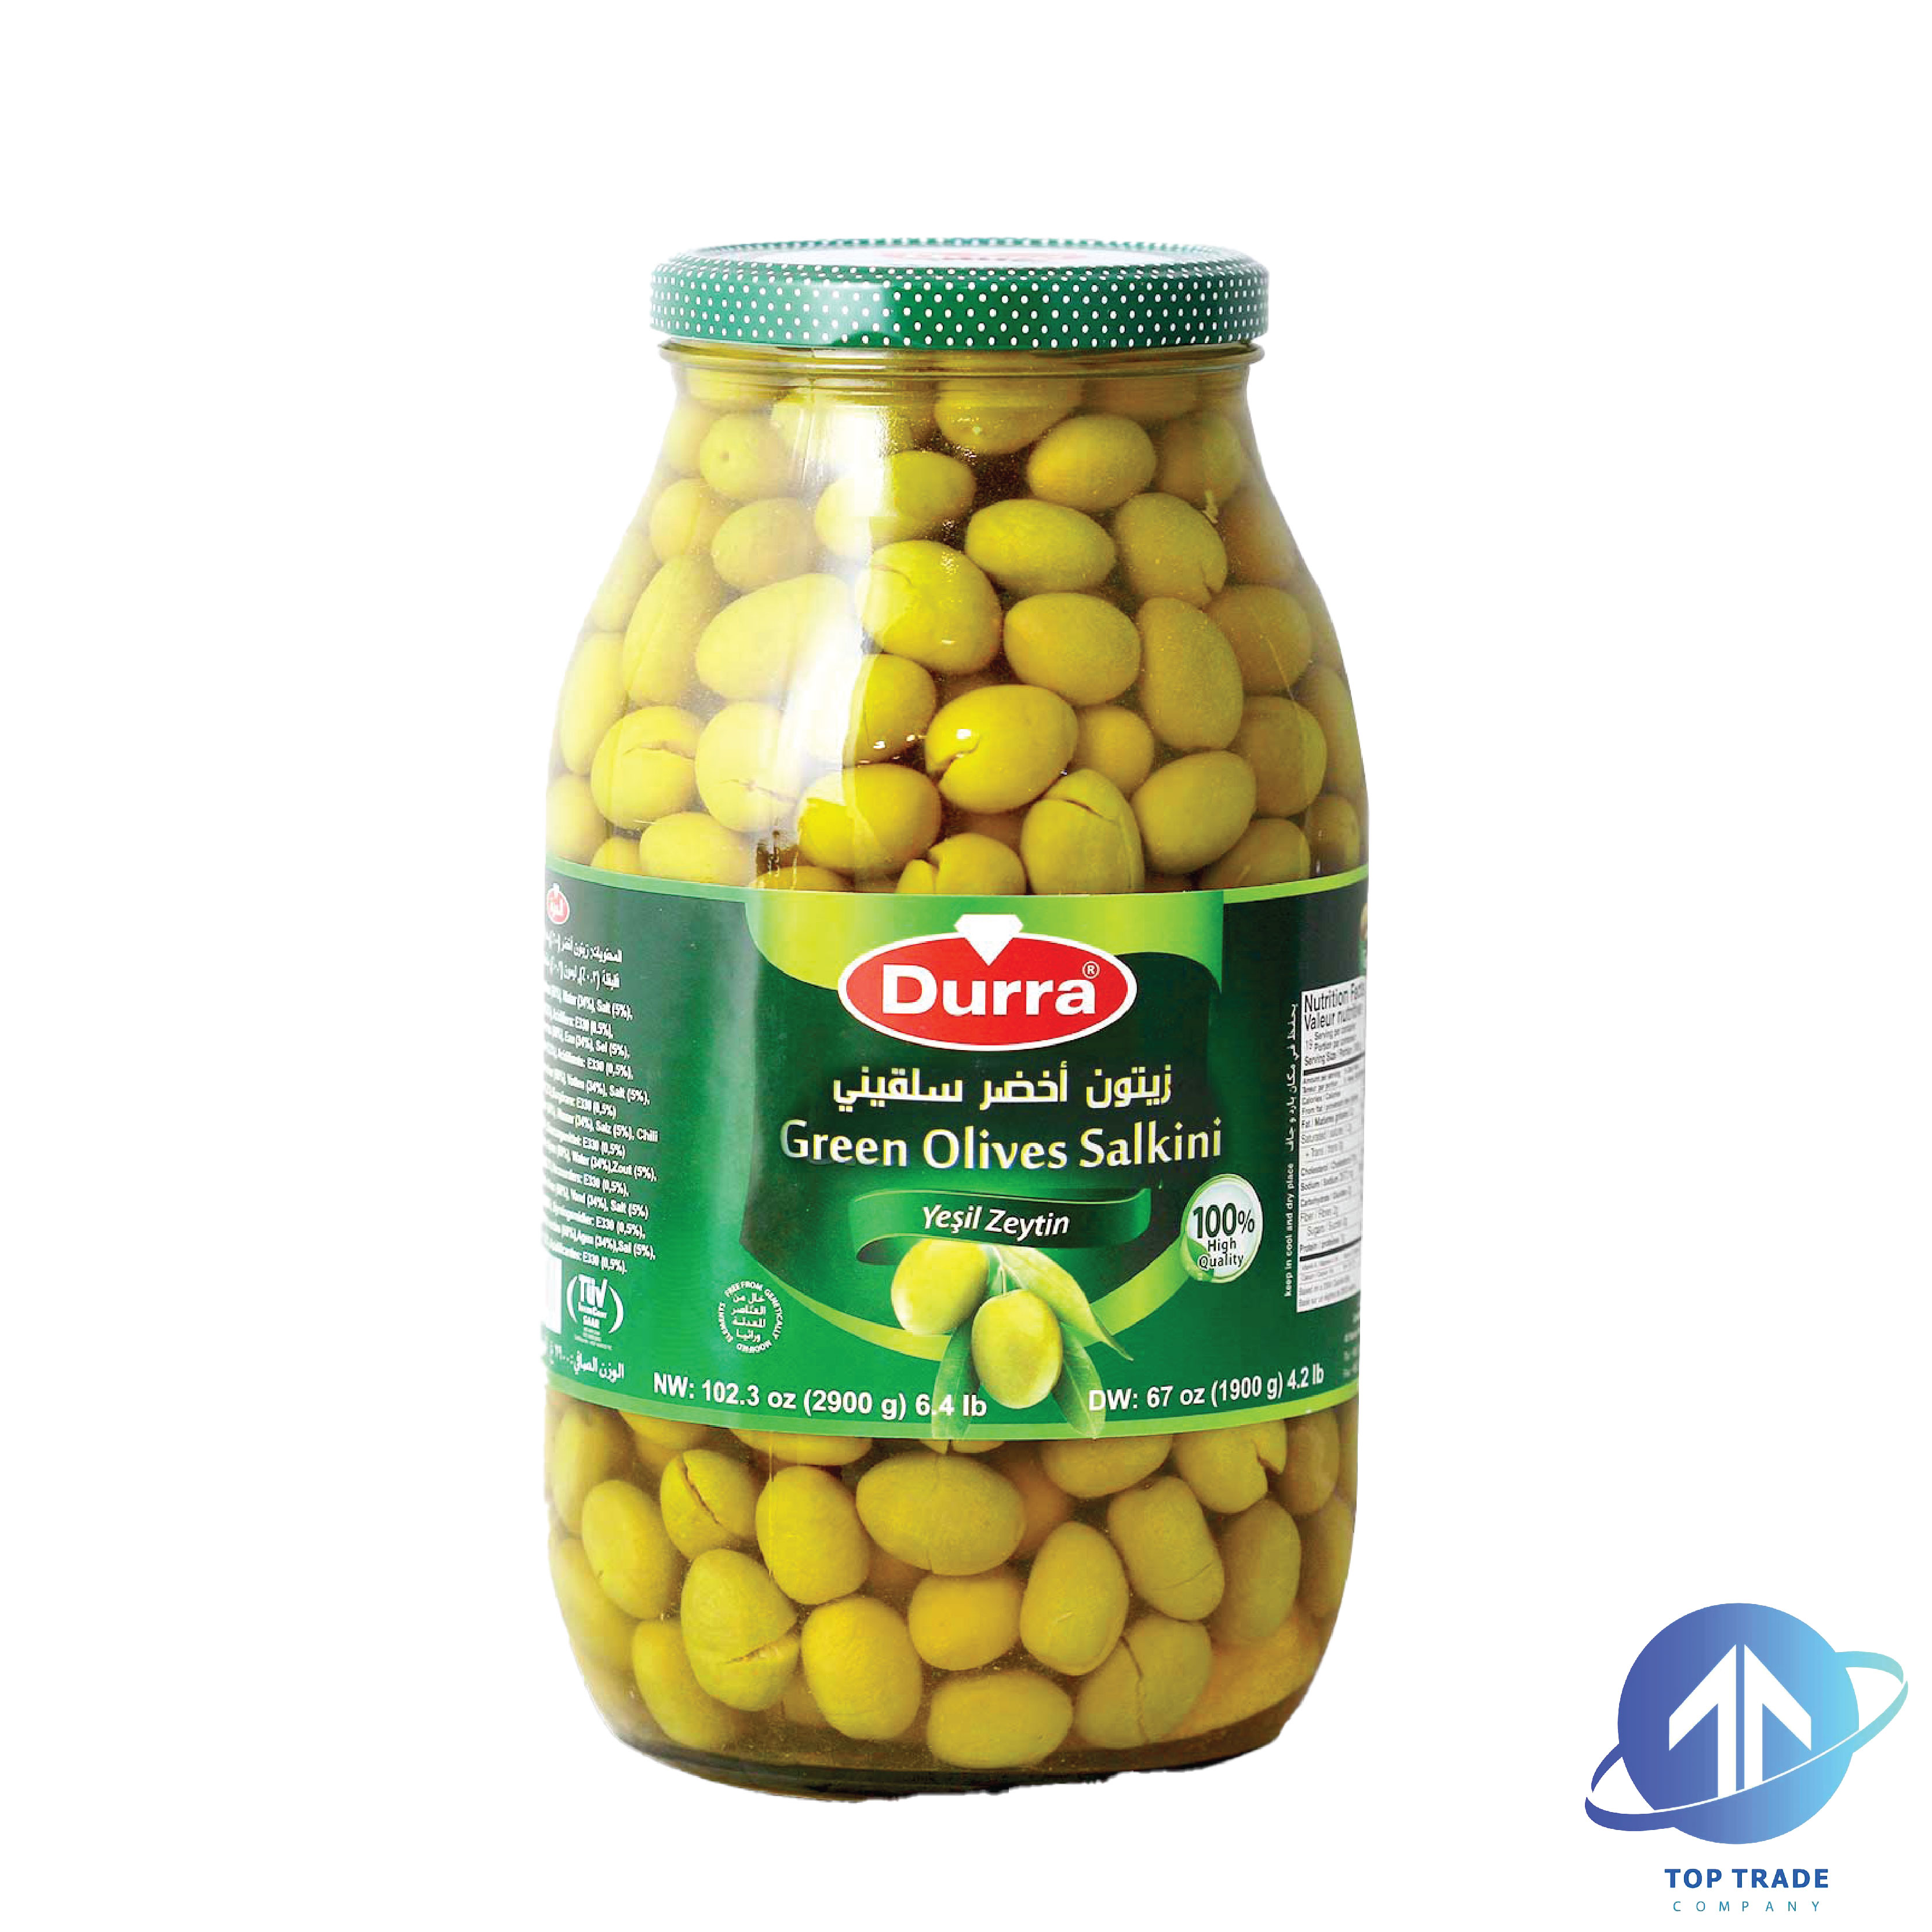 Durra Green Olives Salkini 2900gr 